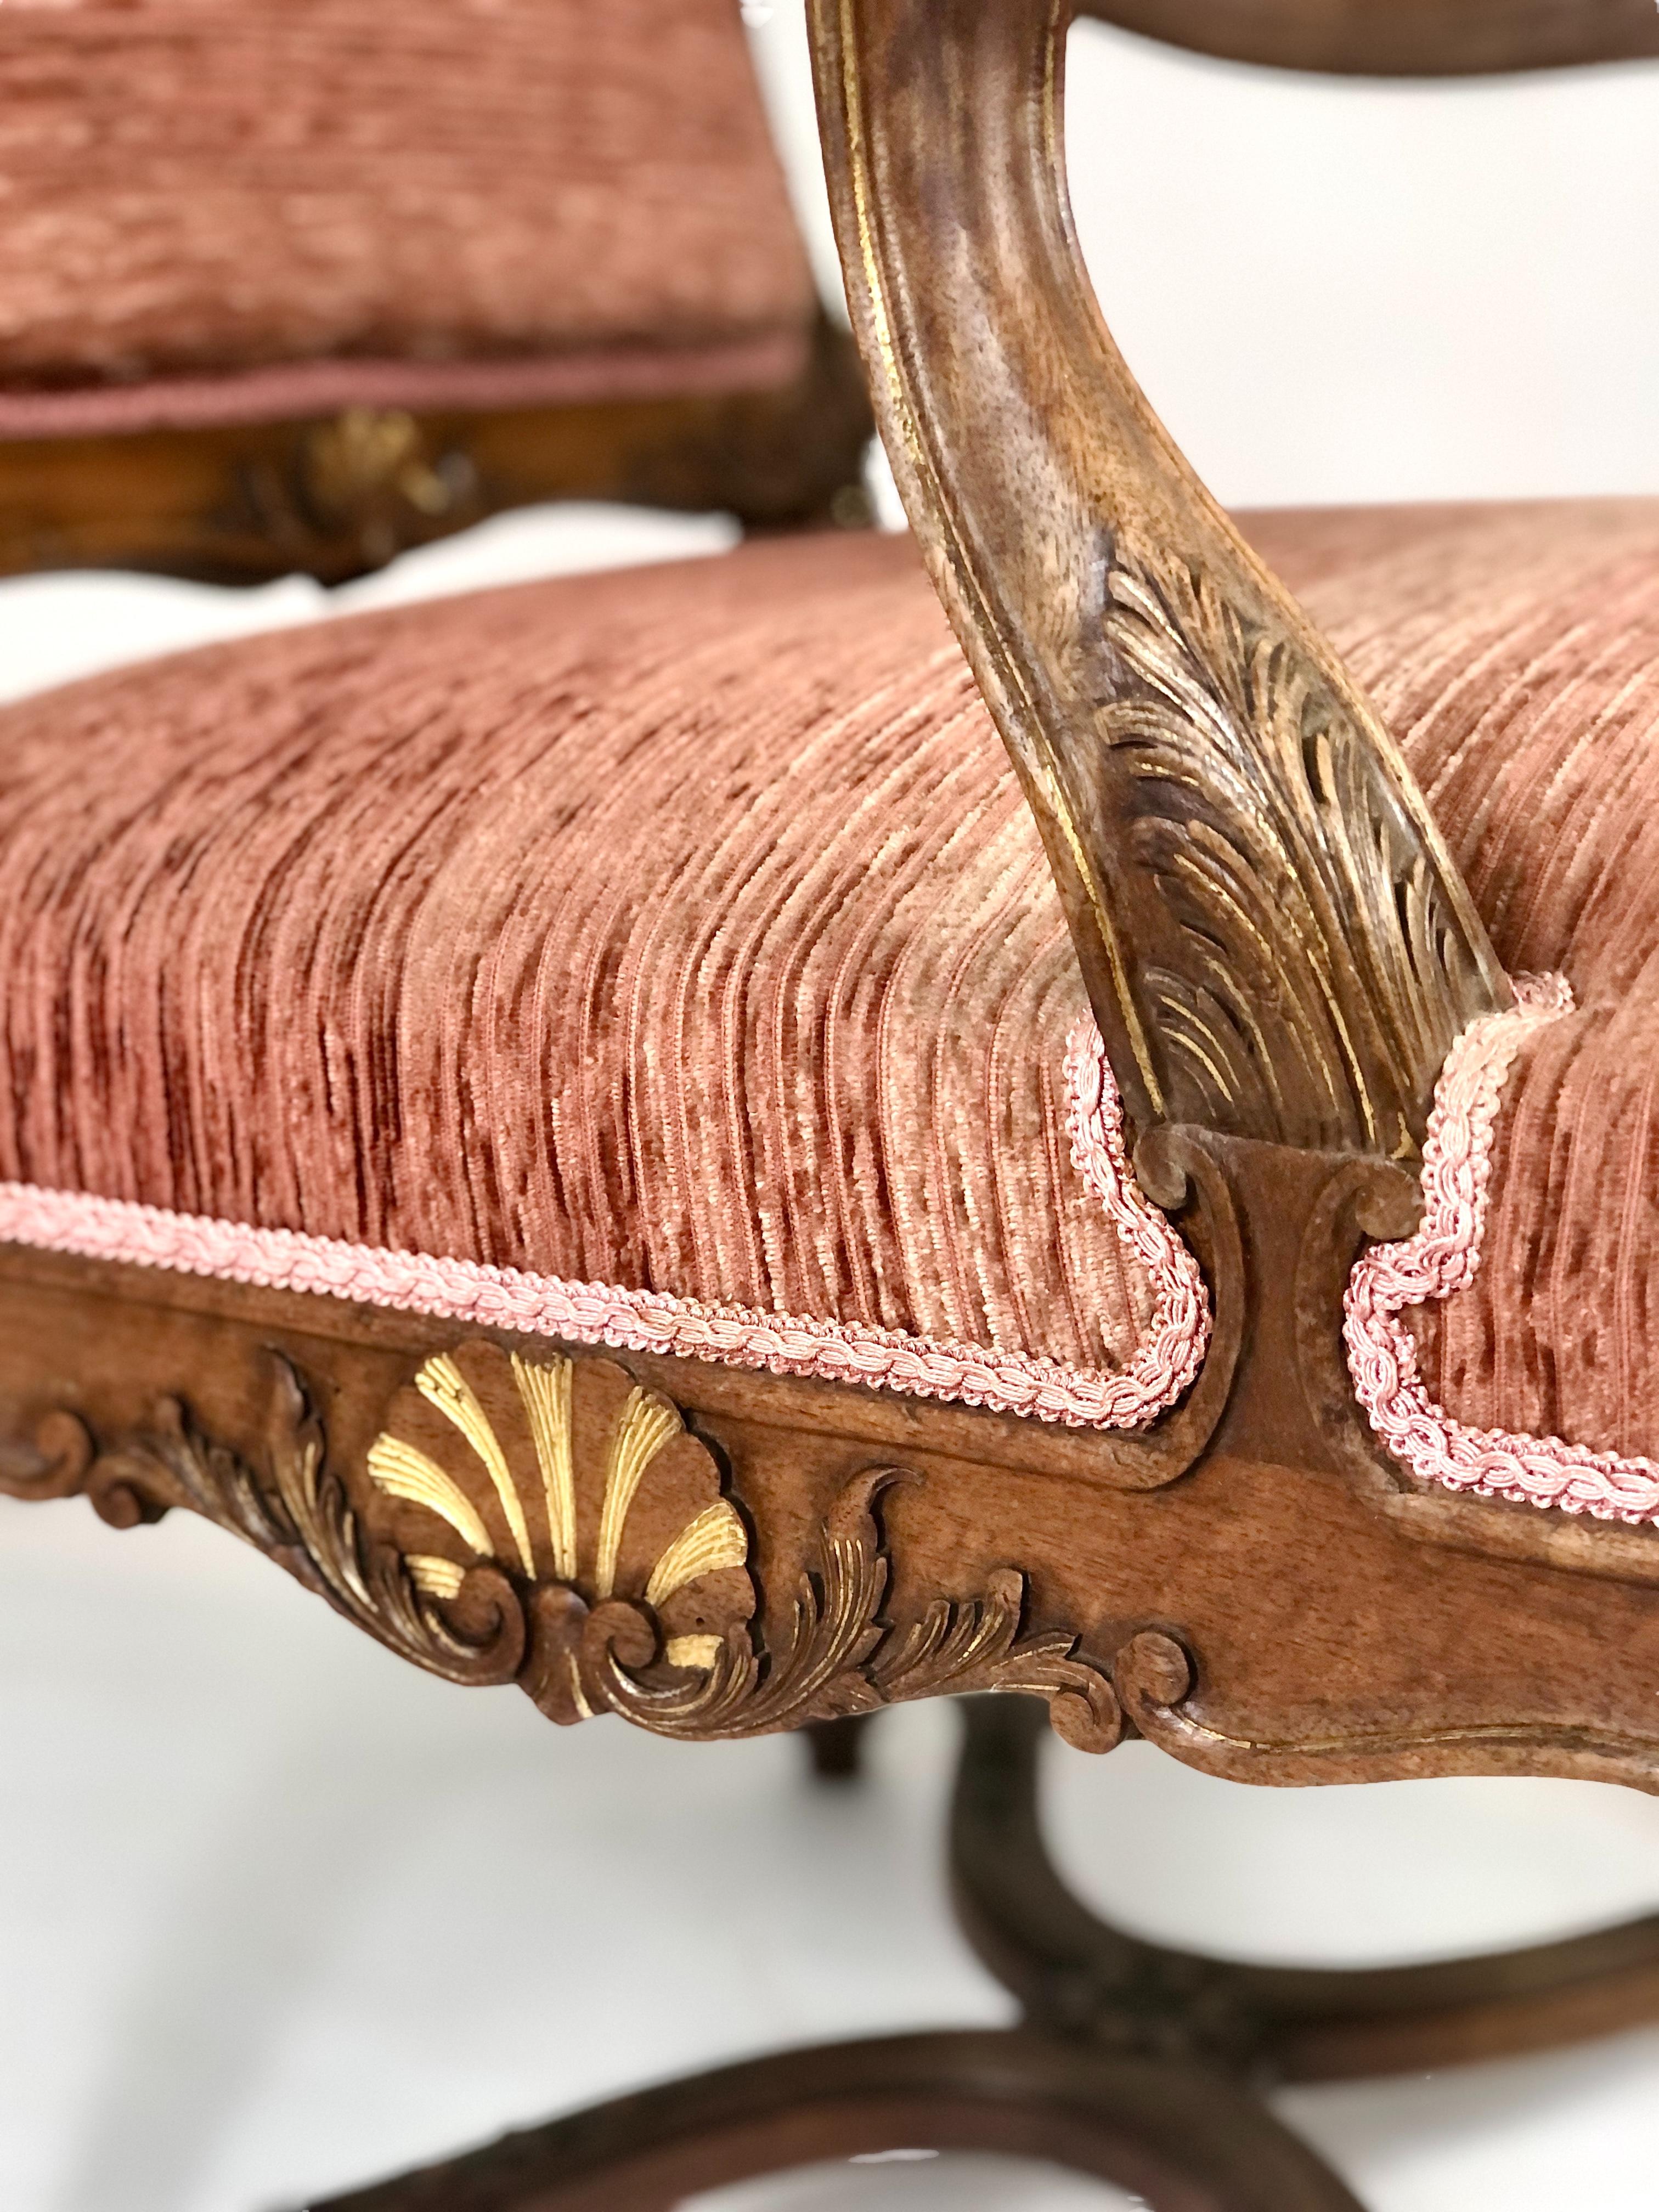 19th Century Pair of Walnut Regency Chairs Called “Fauteuils à La Reine” For Sale 13